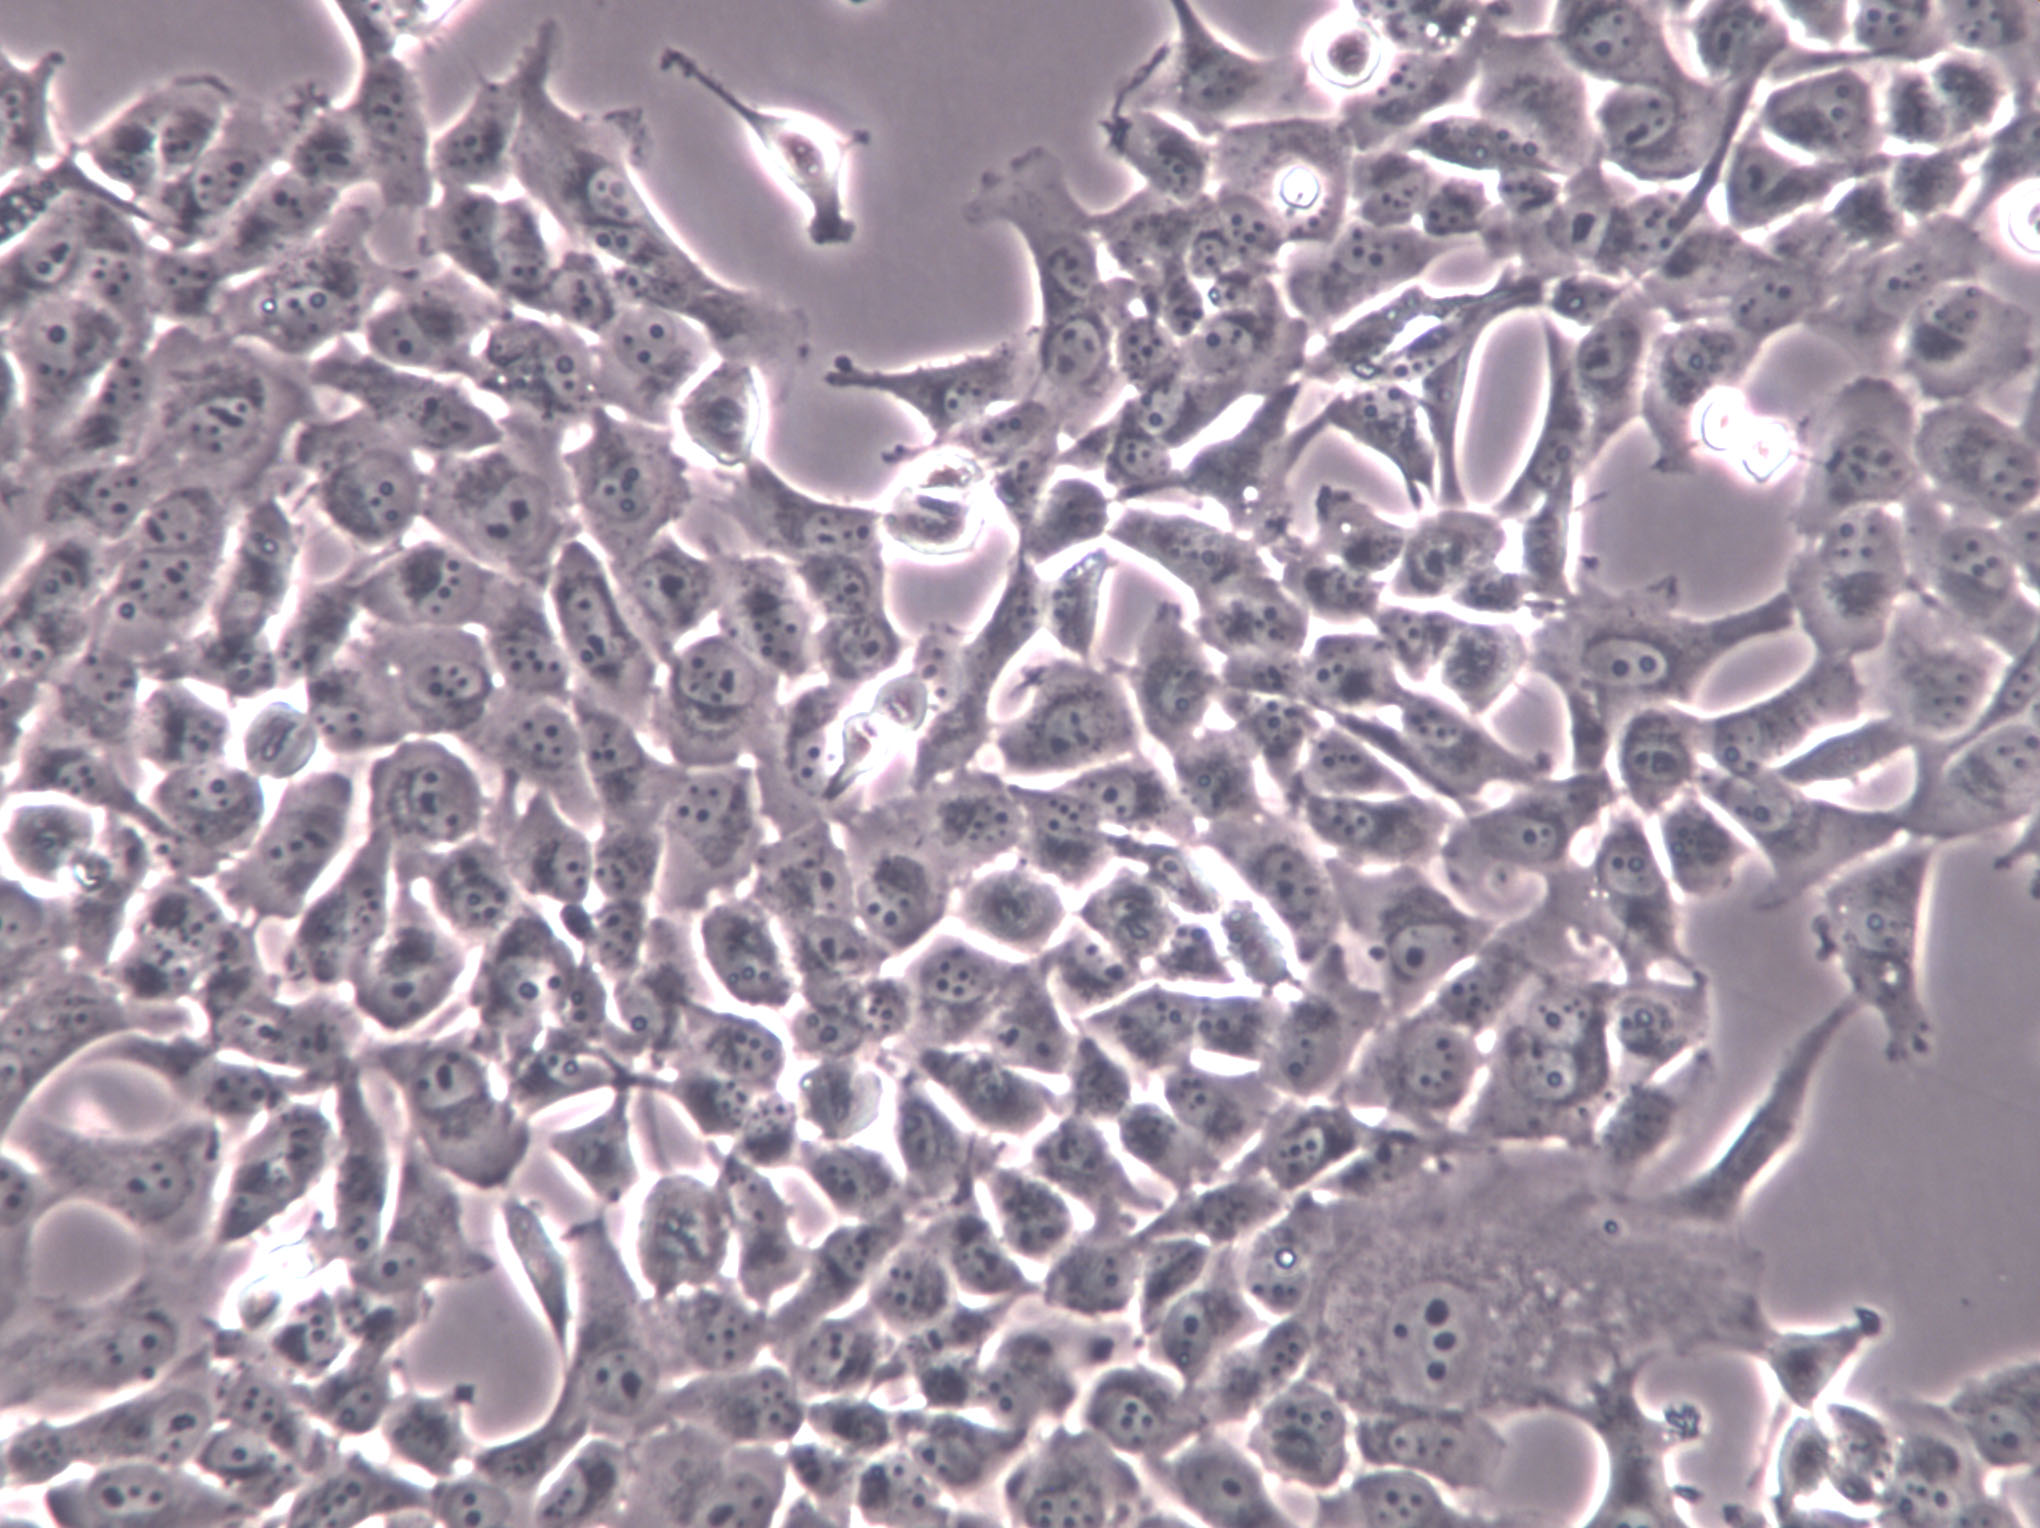 SNU-638 Cells(赠送Str鉴定报告)|人胃癌细胞,SNU-638 Cells